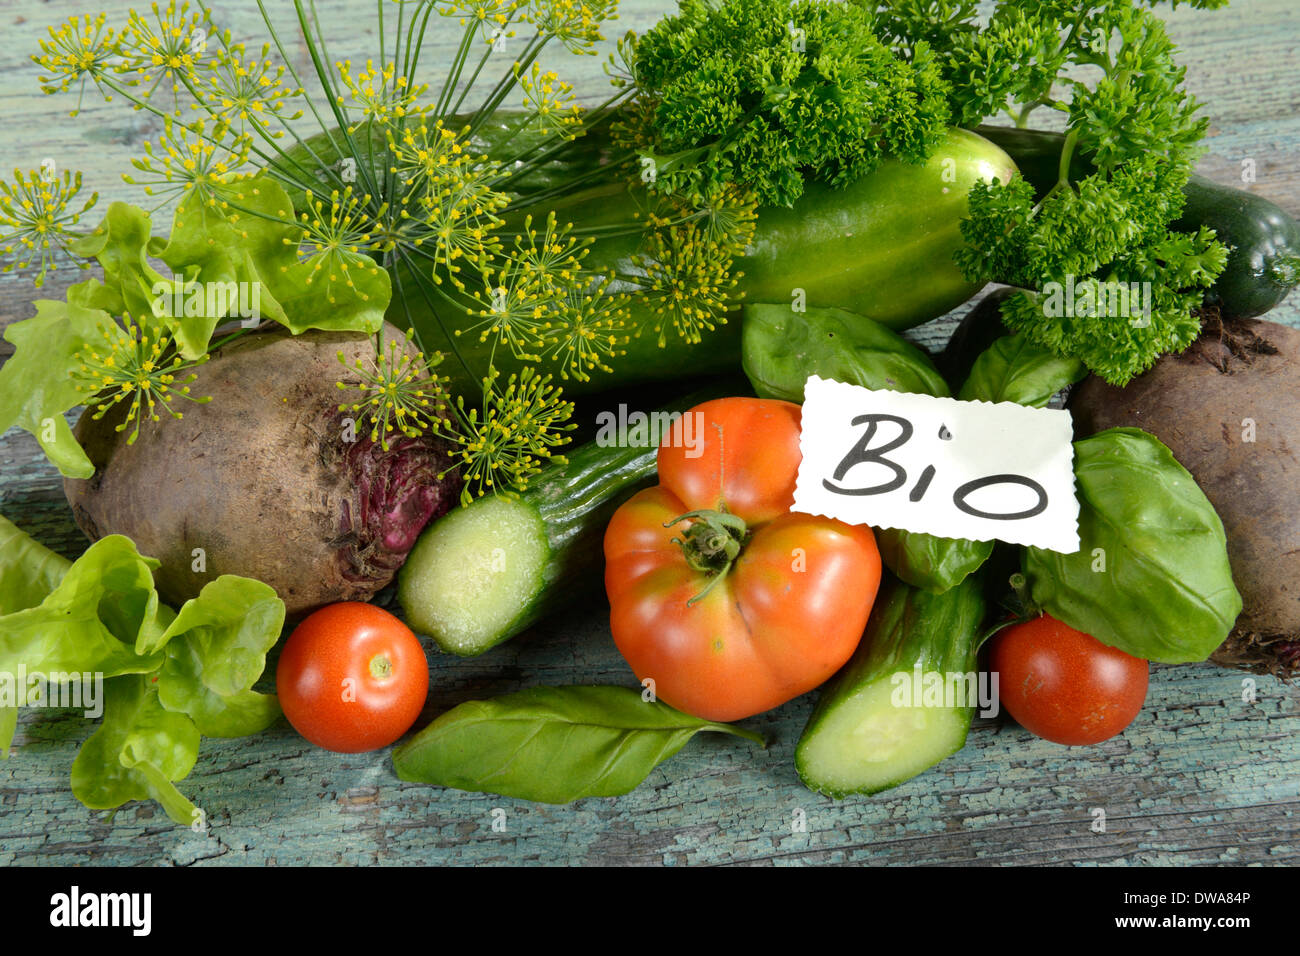 Several vegetables Stock Photo